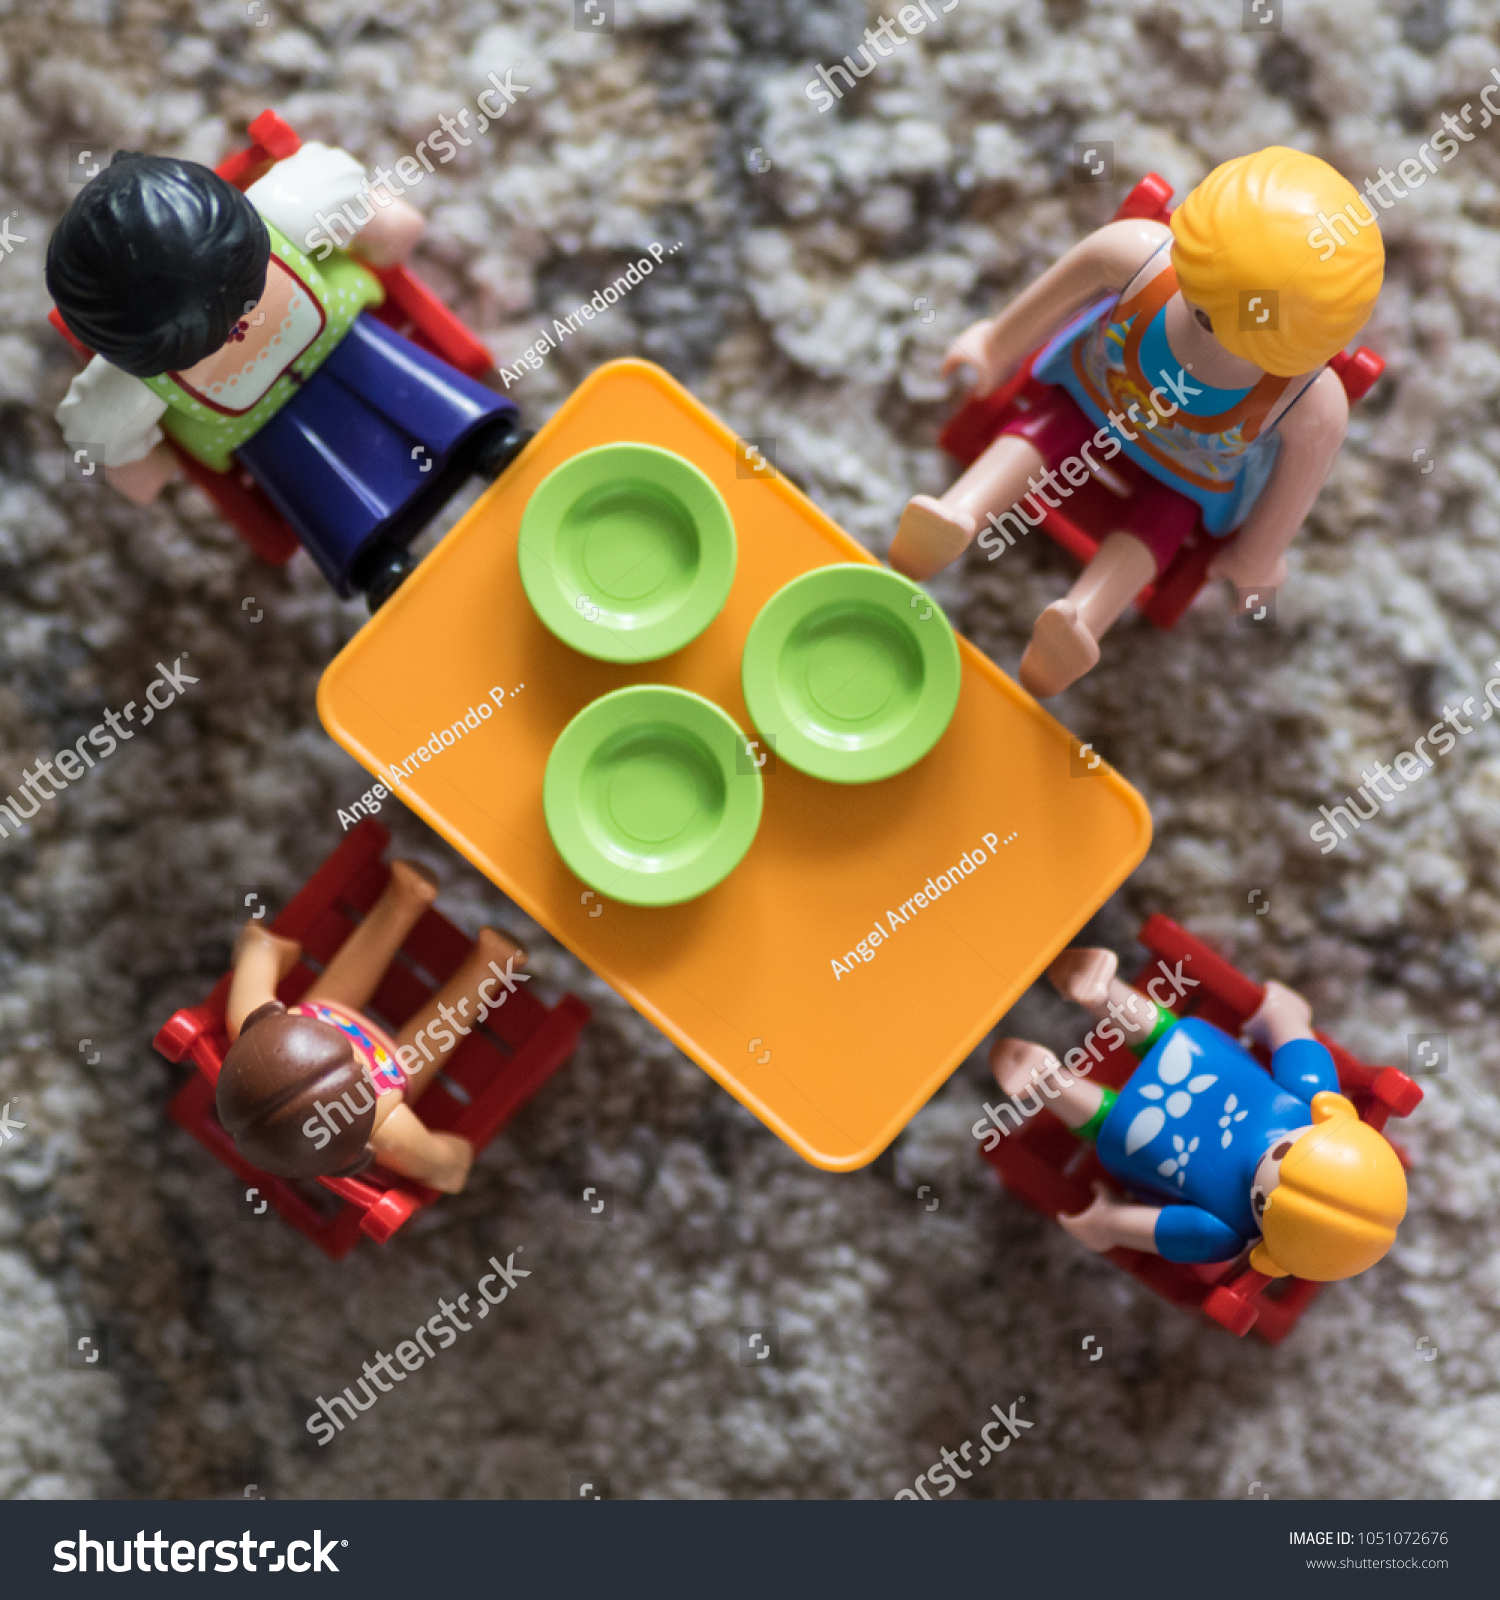 playmobil picnic